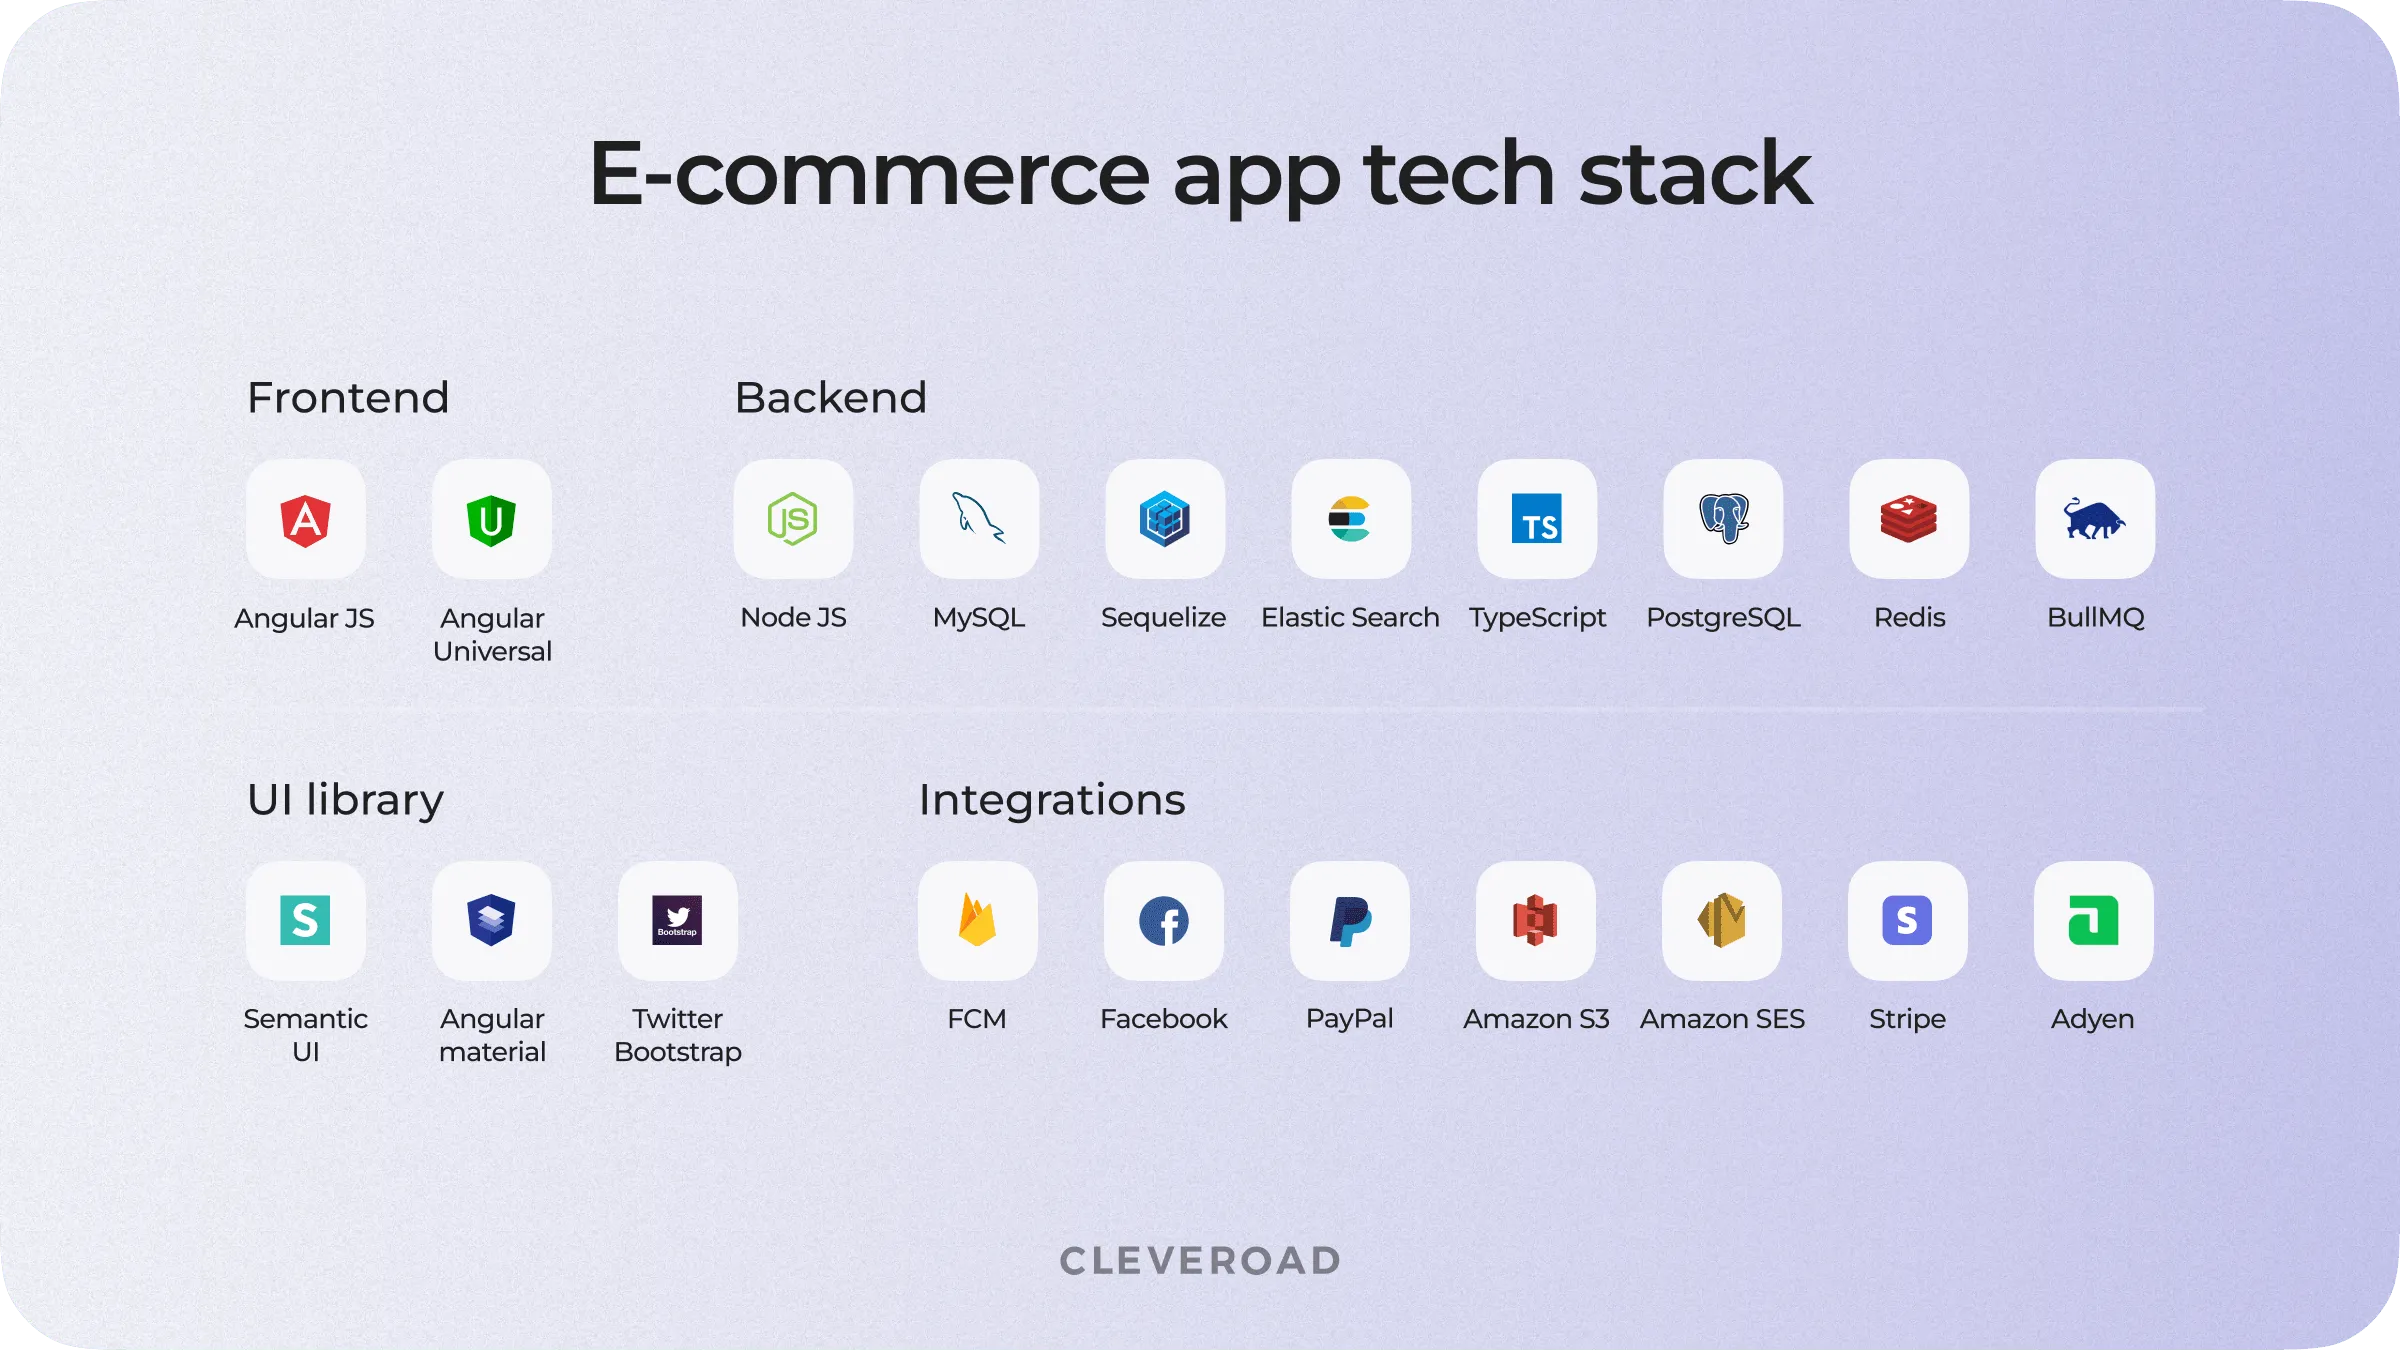 Common technologies for an e-Commerce app